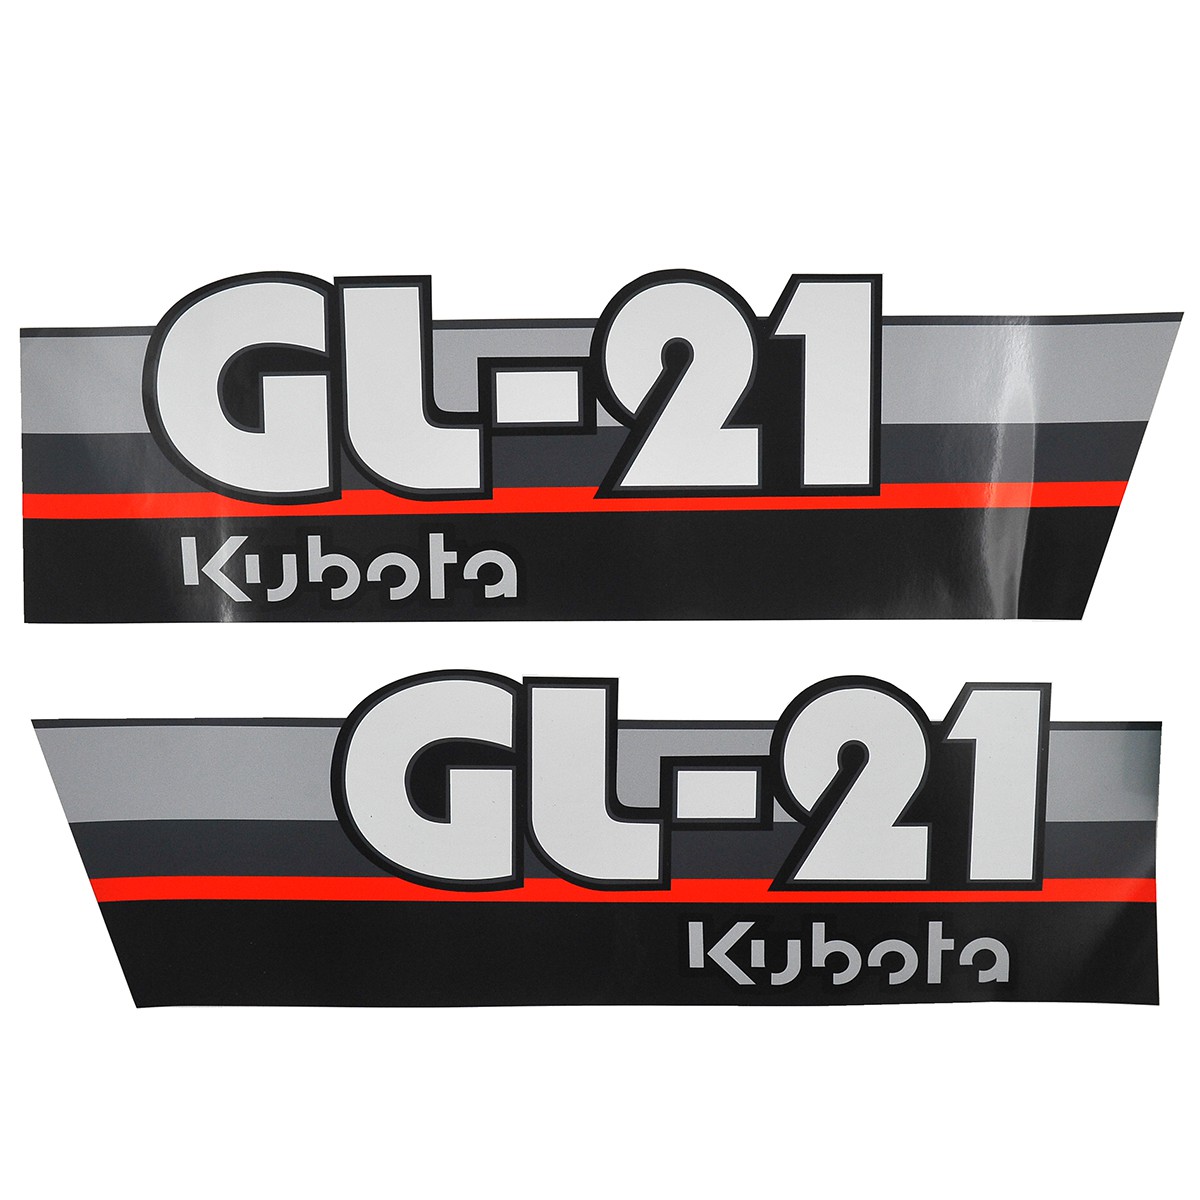 Kubota GL21 stickers